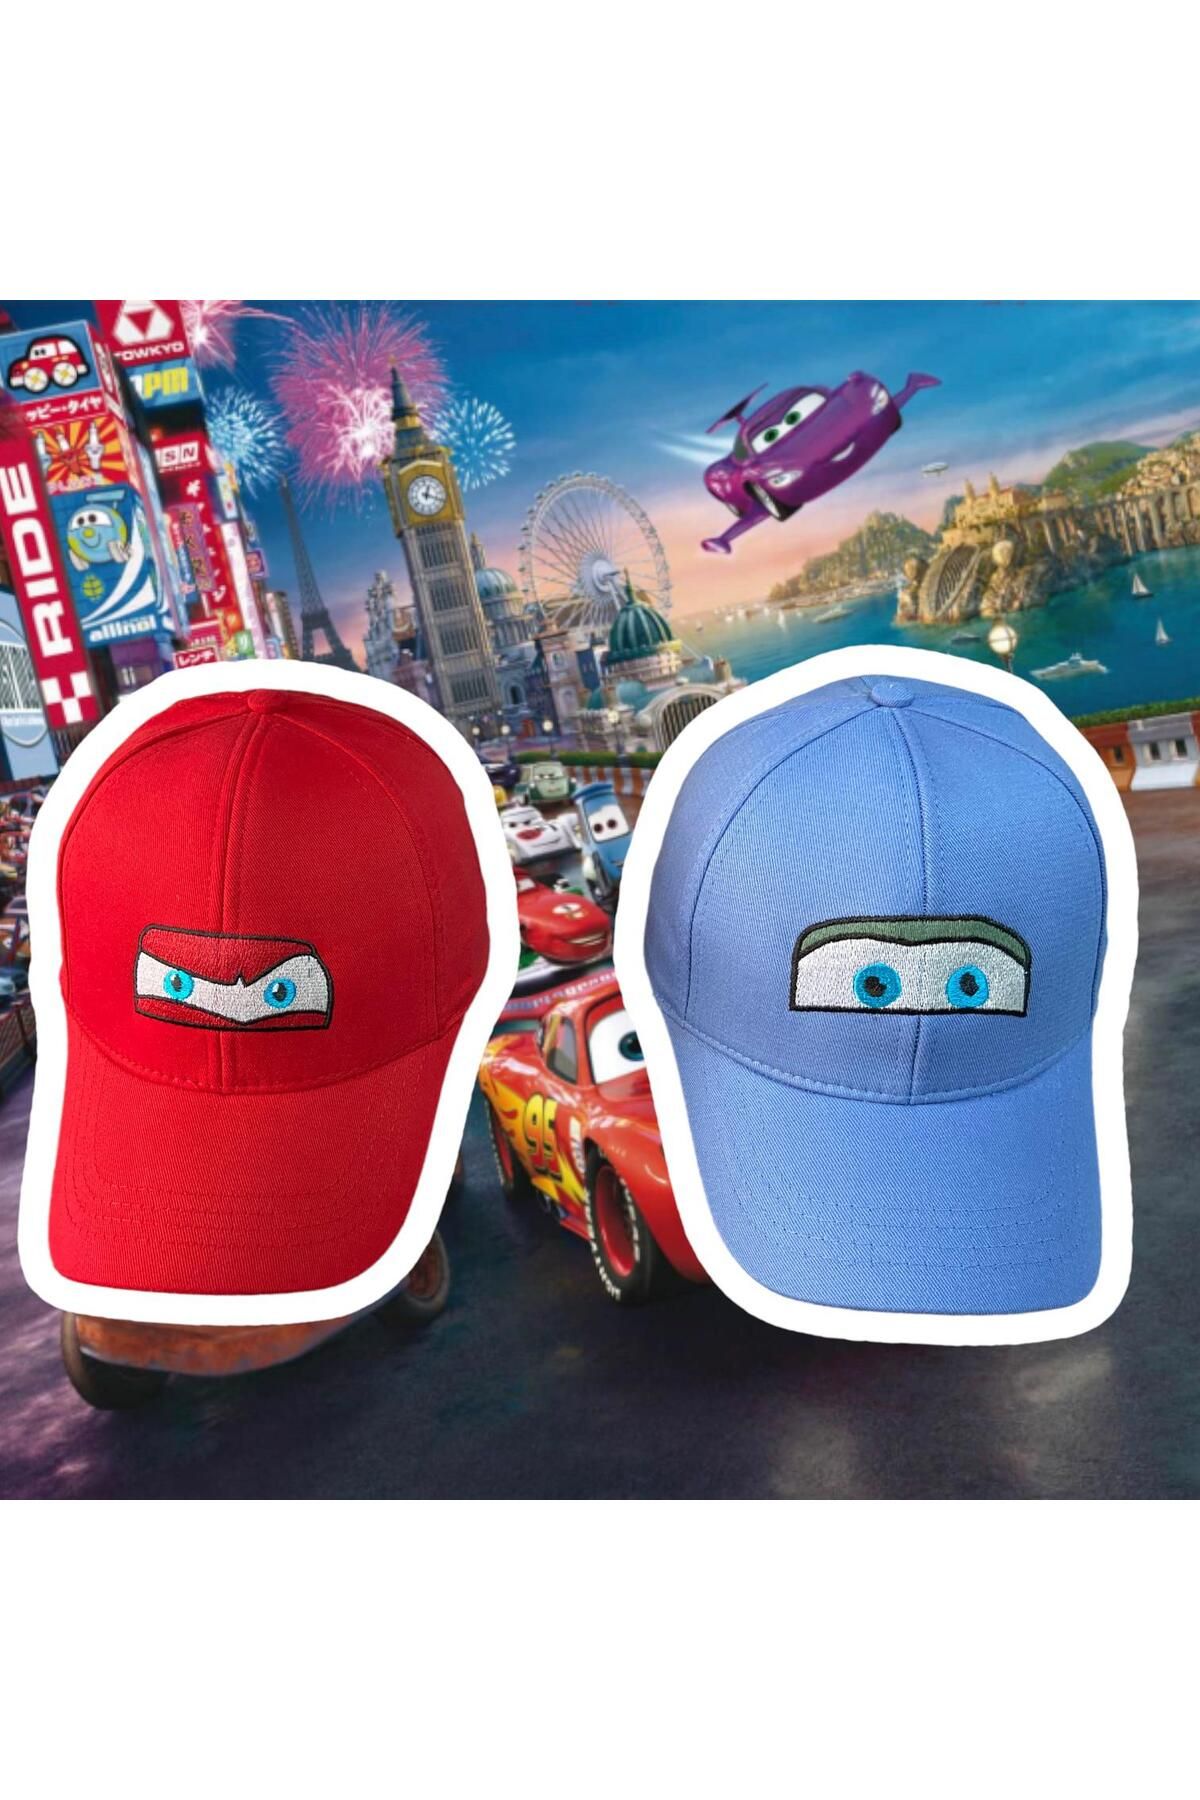 Köstebek Cars Kırmızı Mcqueen & Mavi Sally Çift Şapka